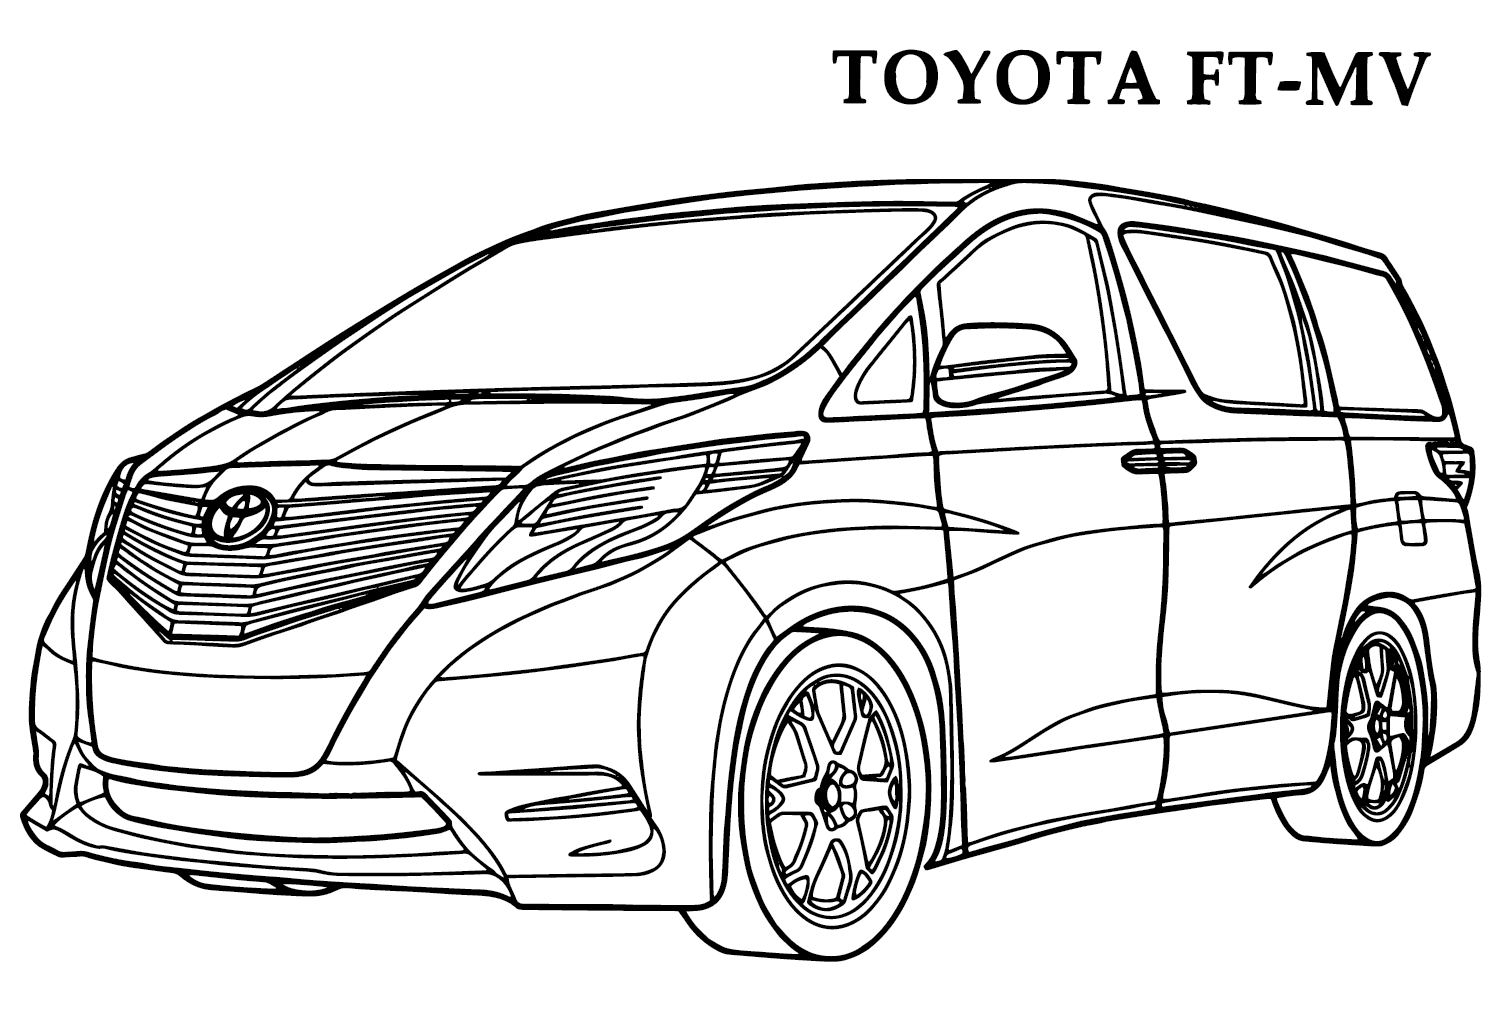 Цветная страница Toyota FT-MV от Toyota